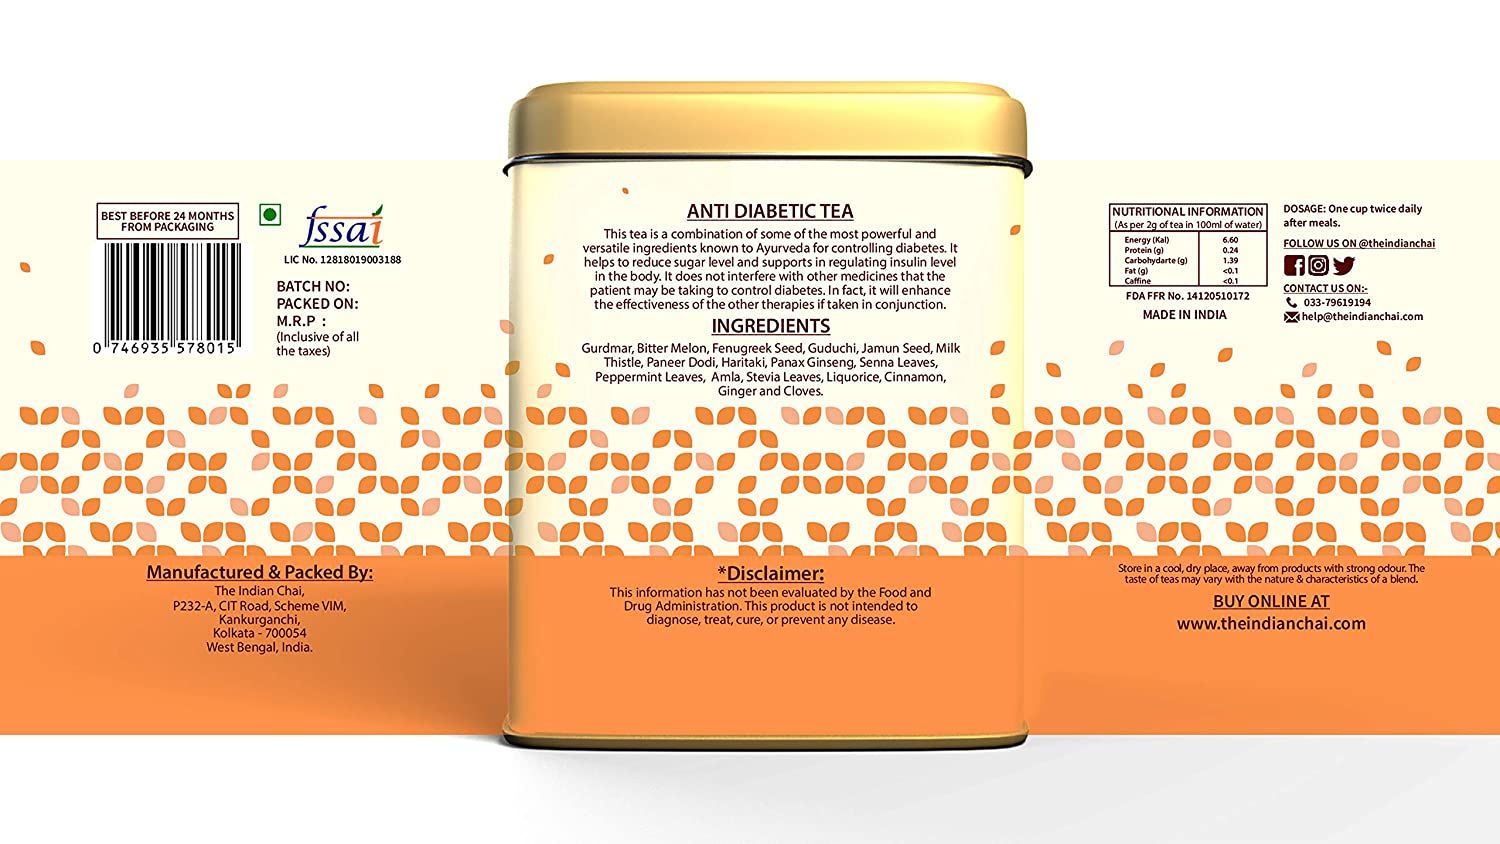 The Indian Chai Anti Diabetic Tea Image